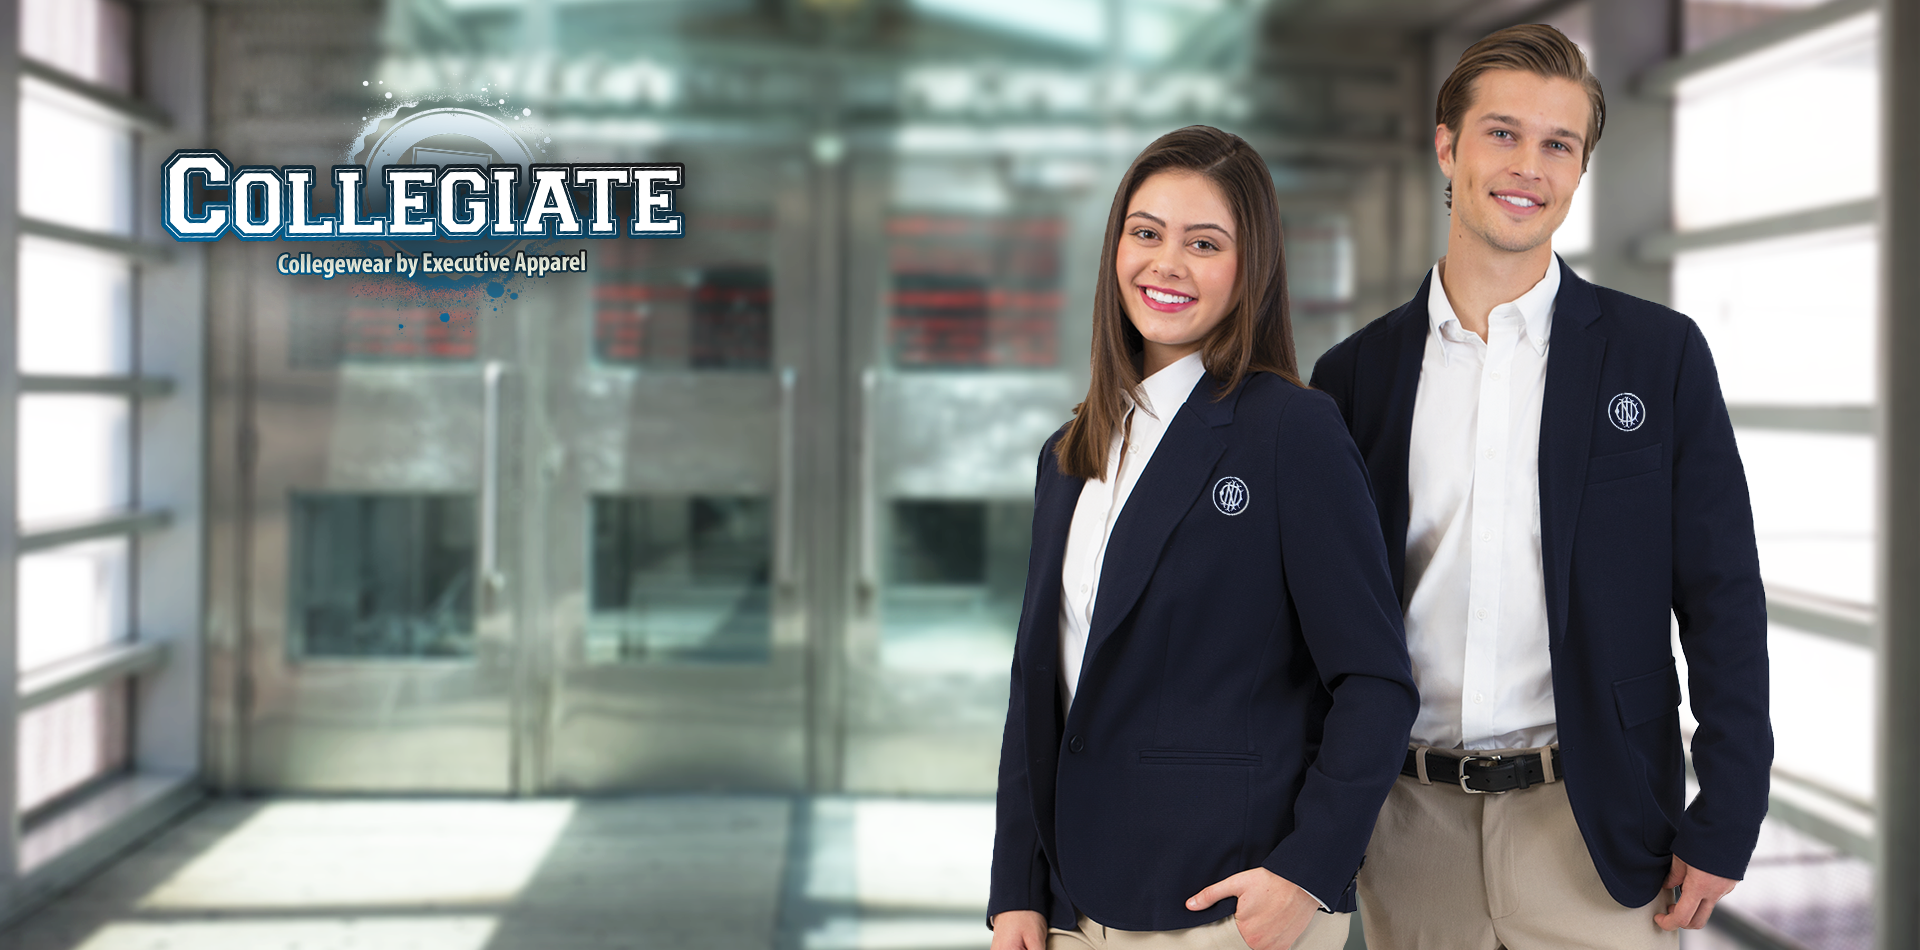 Collegiate Uniforms by Executive Apparel